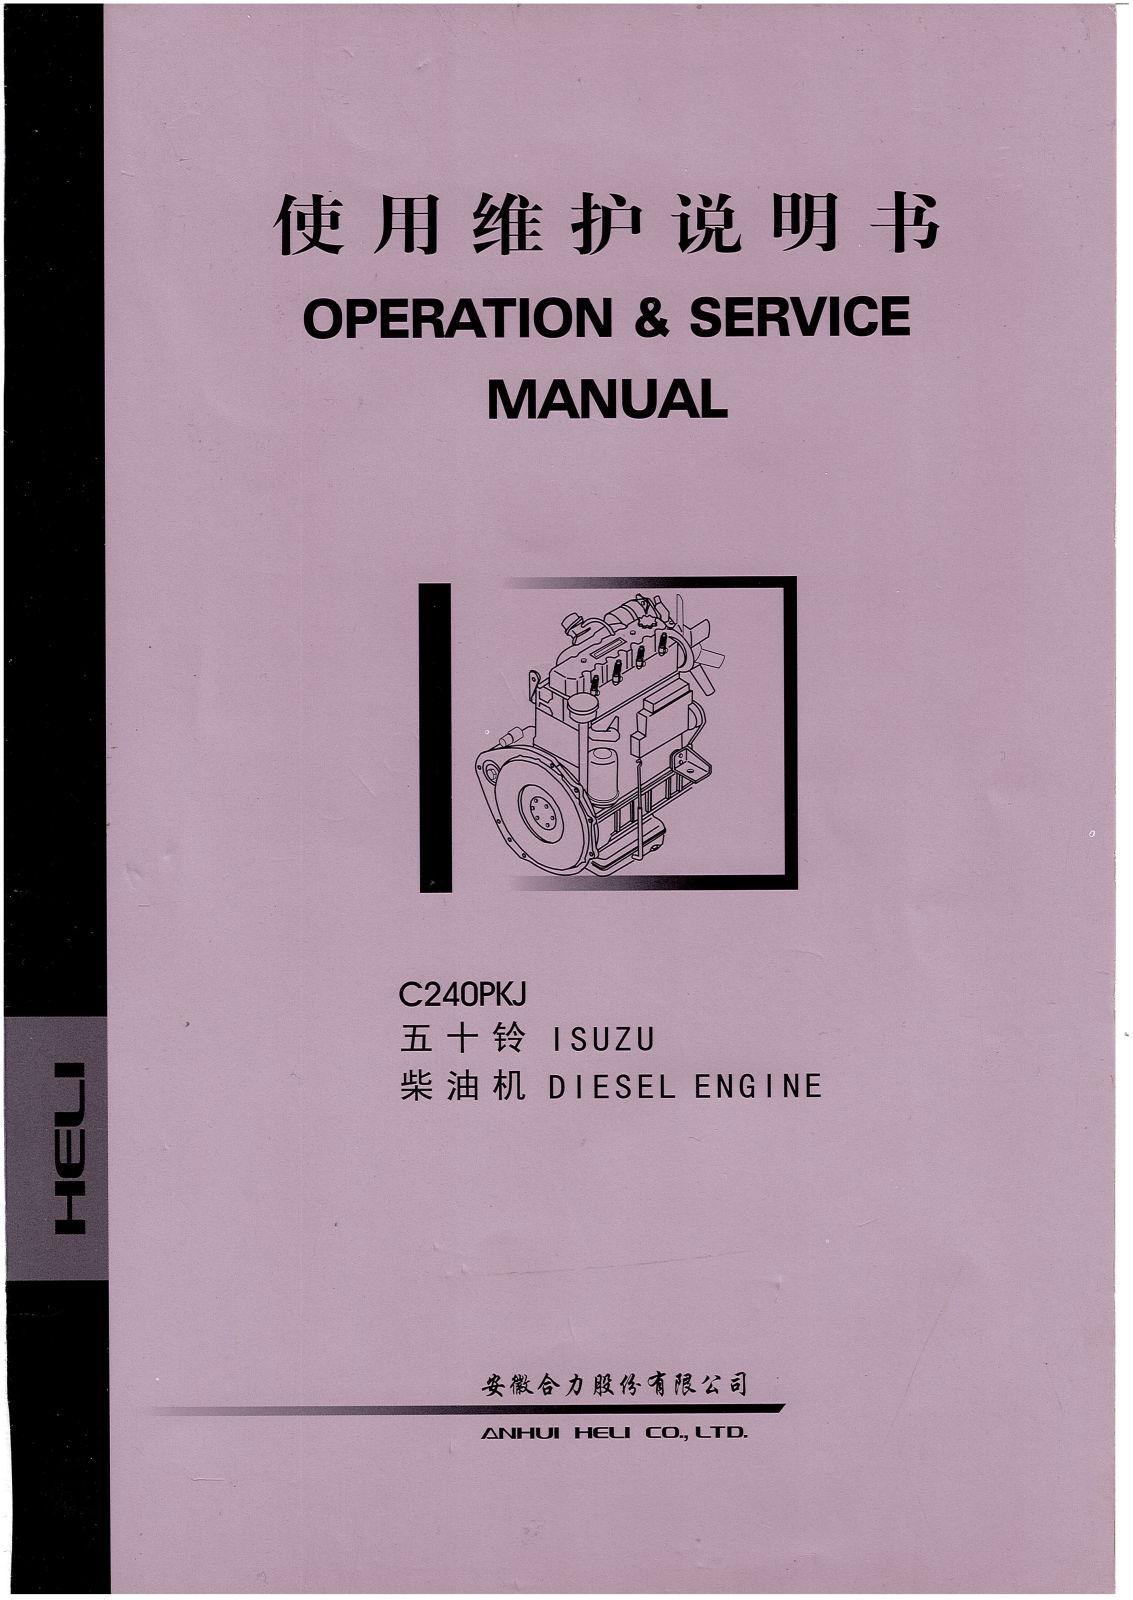 Isuzu C240PKJ User Manual and service manual